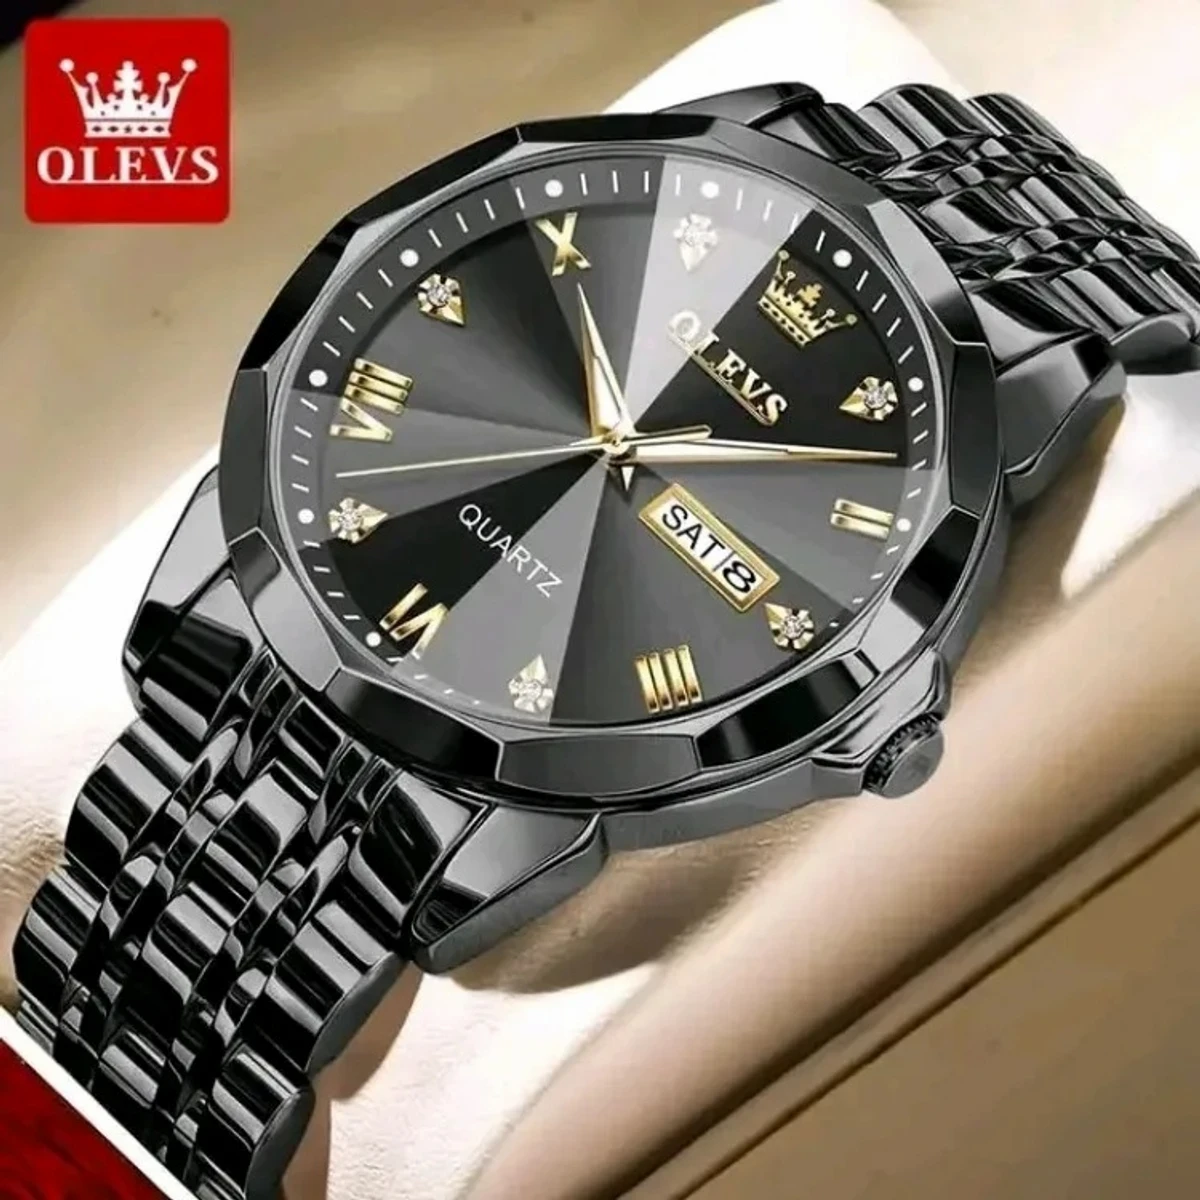 OLEVS MODEL 9931 Watch for Men Stainless Steel Watches - 9941 FULL BLACK WATCH- MAN WATCH